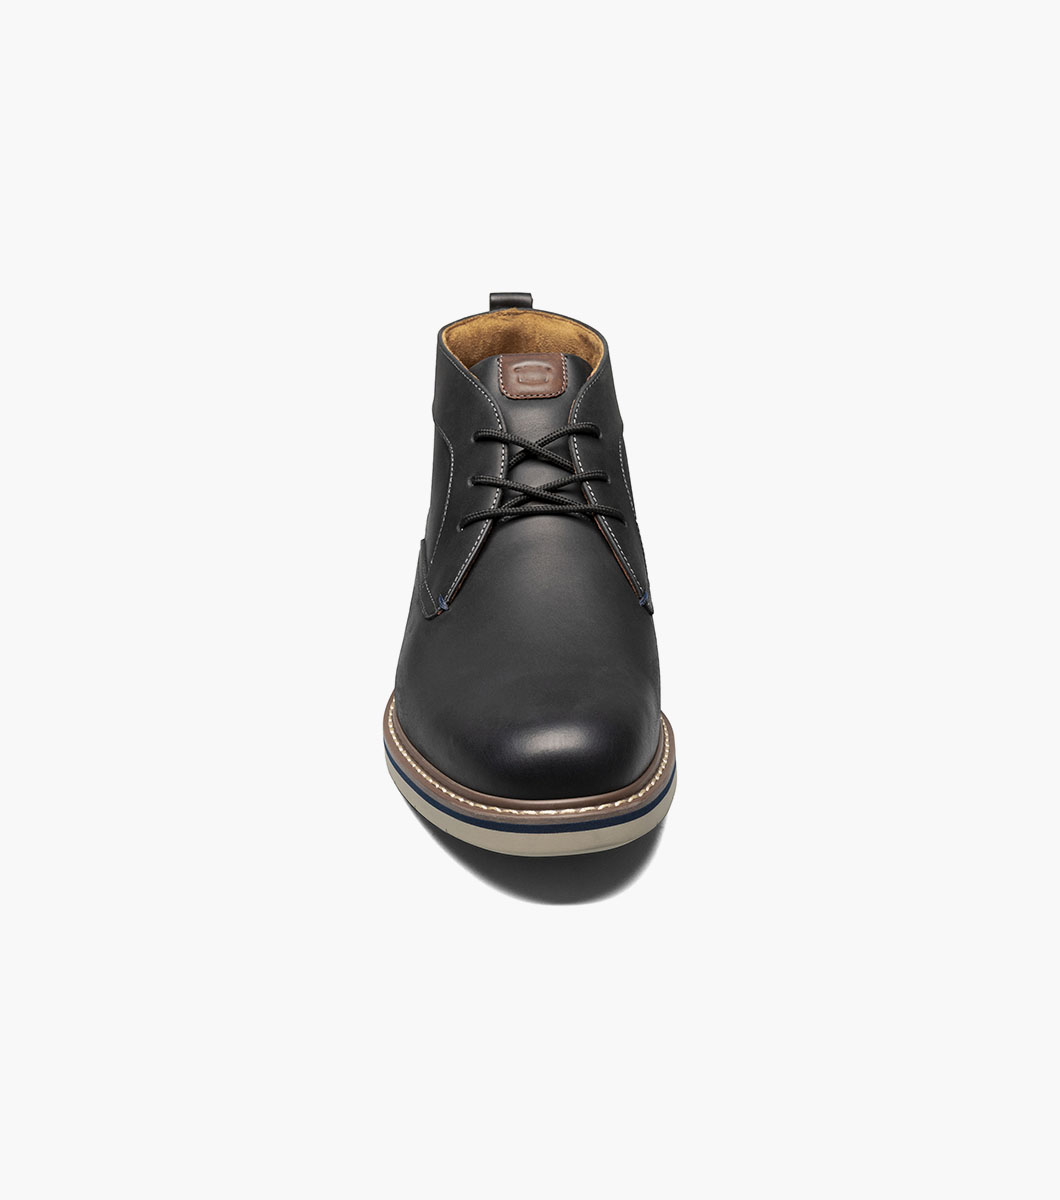 Norwalk Plain Toe Chukka Boot Men’s Dress Shoes | Florsheim.com